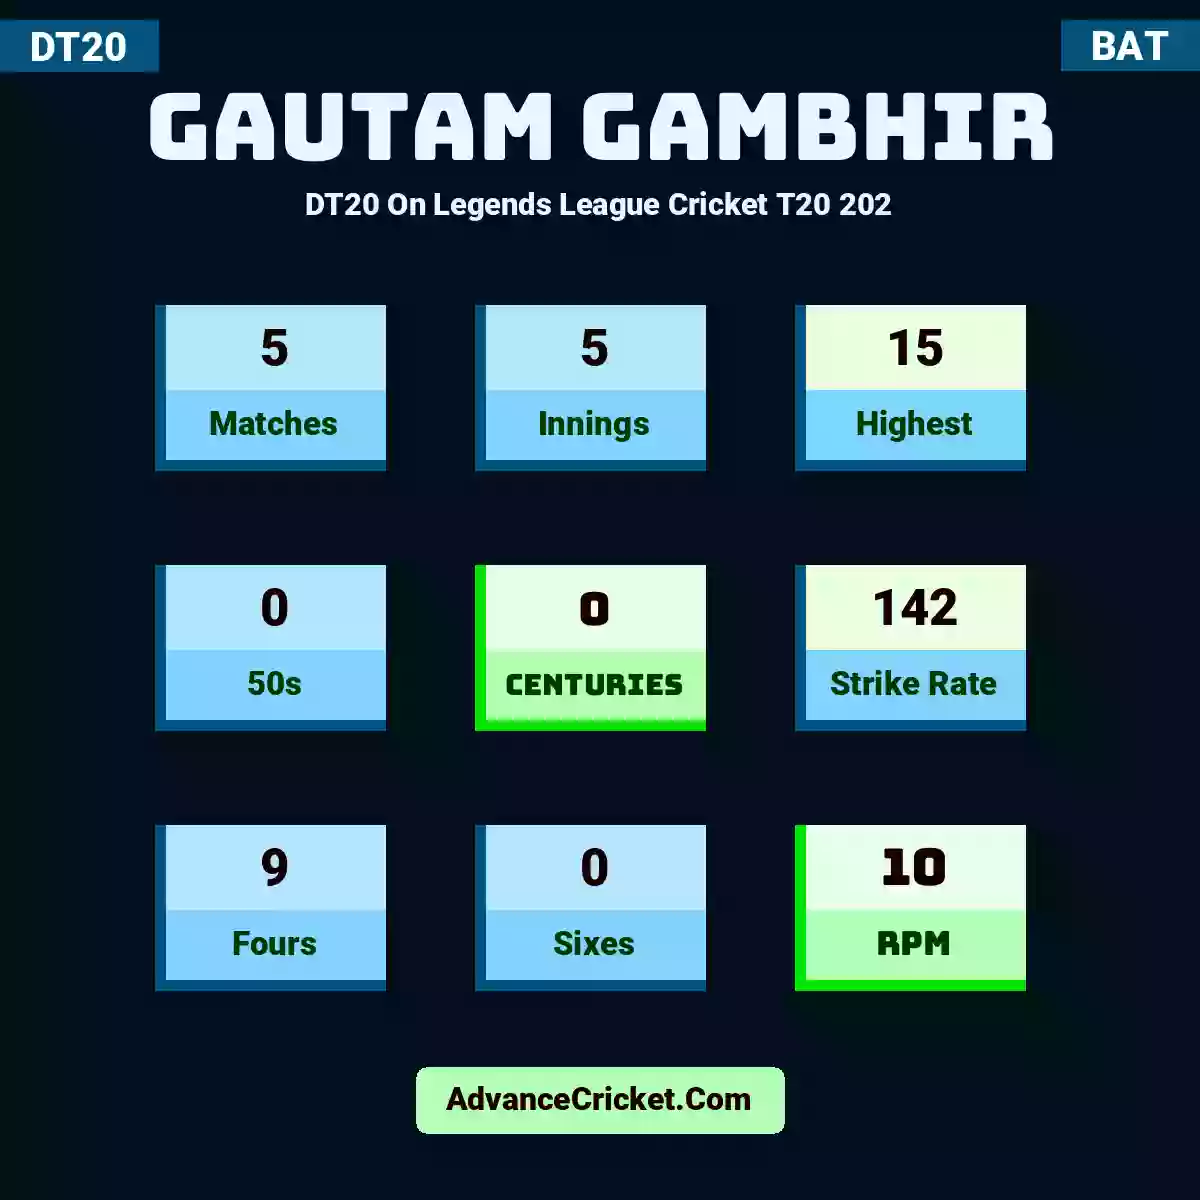 Gautam Gambhir DT20  On Legends League Cricket T20 202, Gautam Gambhir played 5 matches, scored 15 runs as highest, 0 half-centuries, and 0 centuries, with a strike rate of 142. G.Gambhir hit 9 fours and 0 sixes, with an RPM of 10.